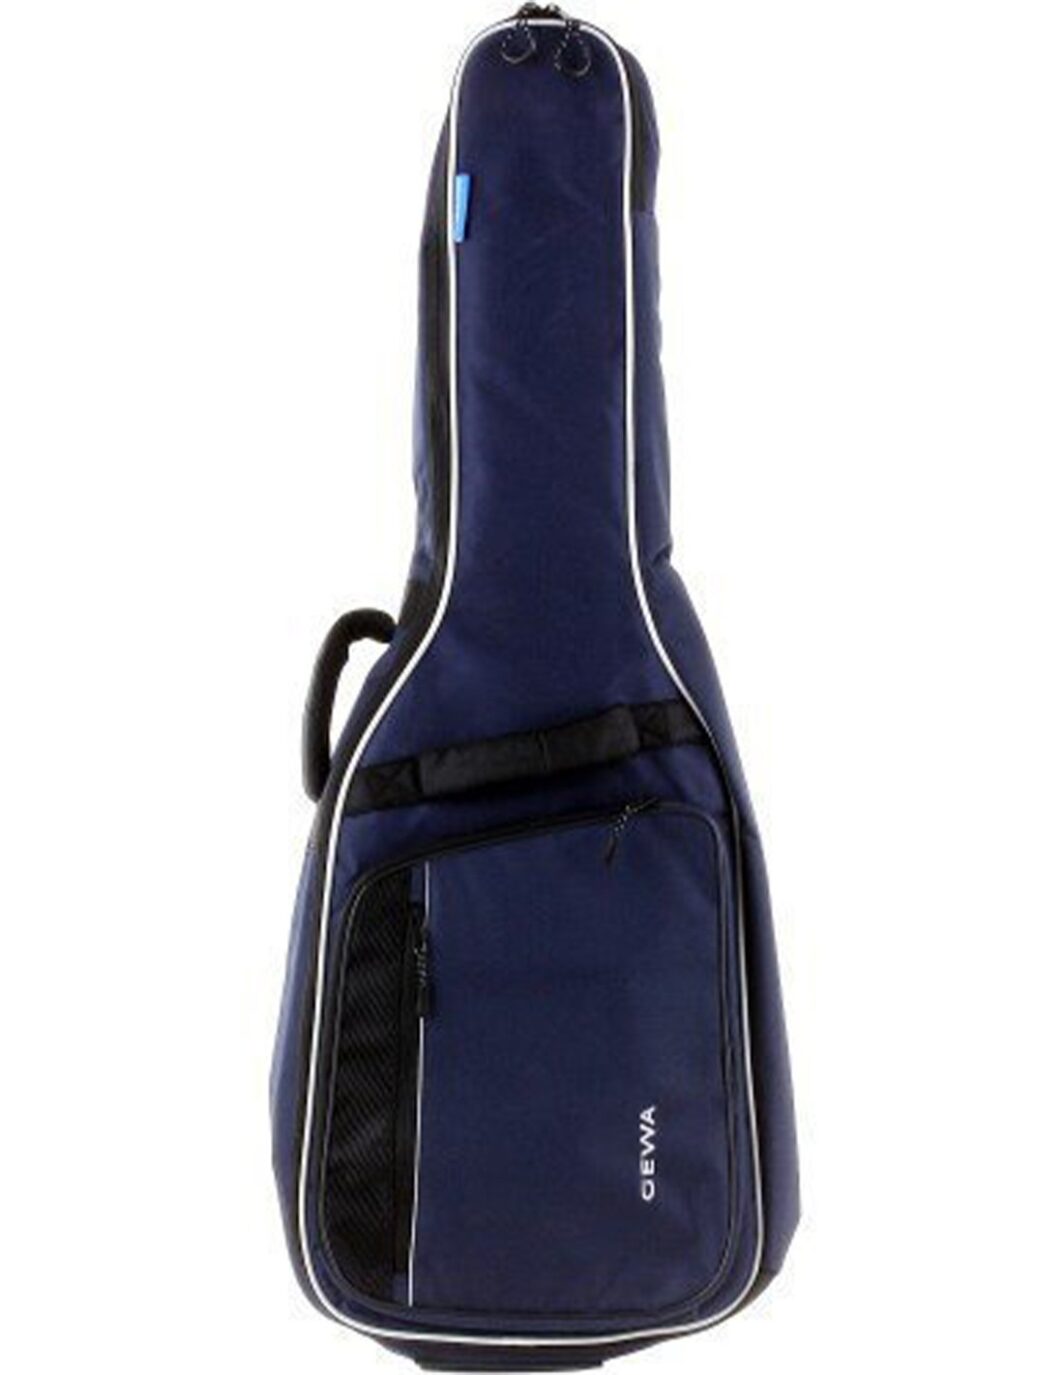 GEWA Gig bag per chitarra Economy Blu